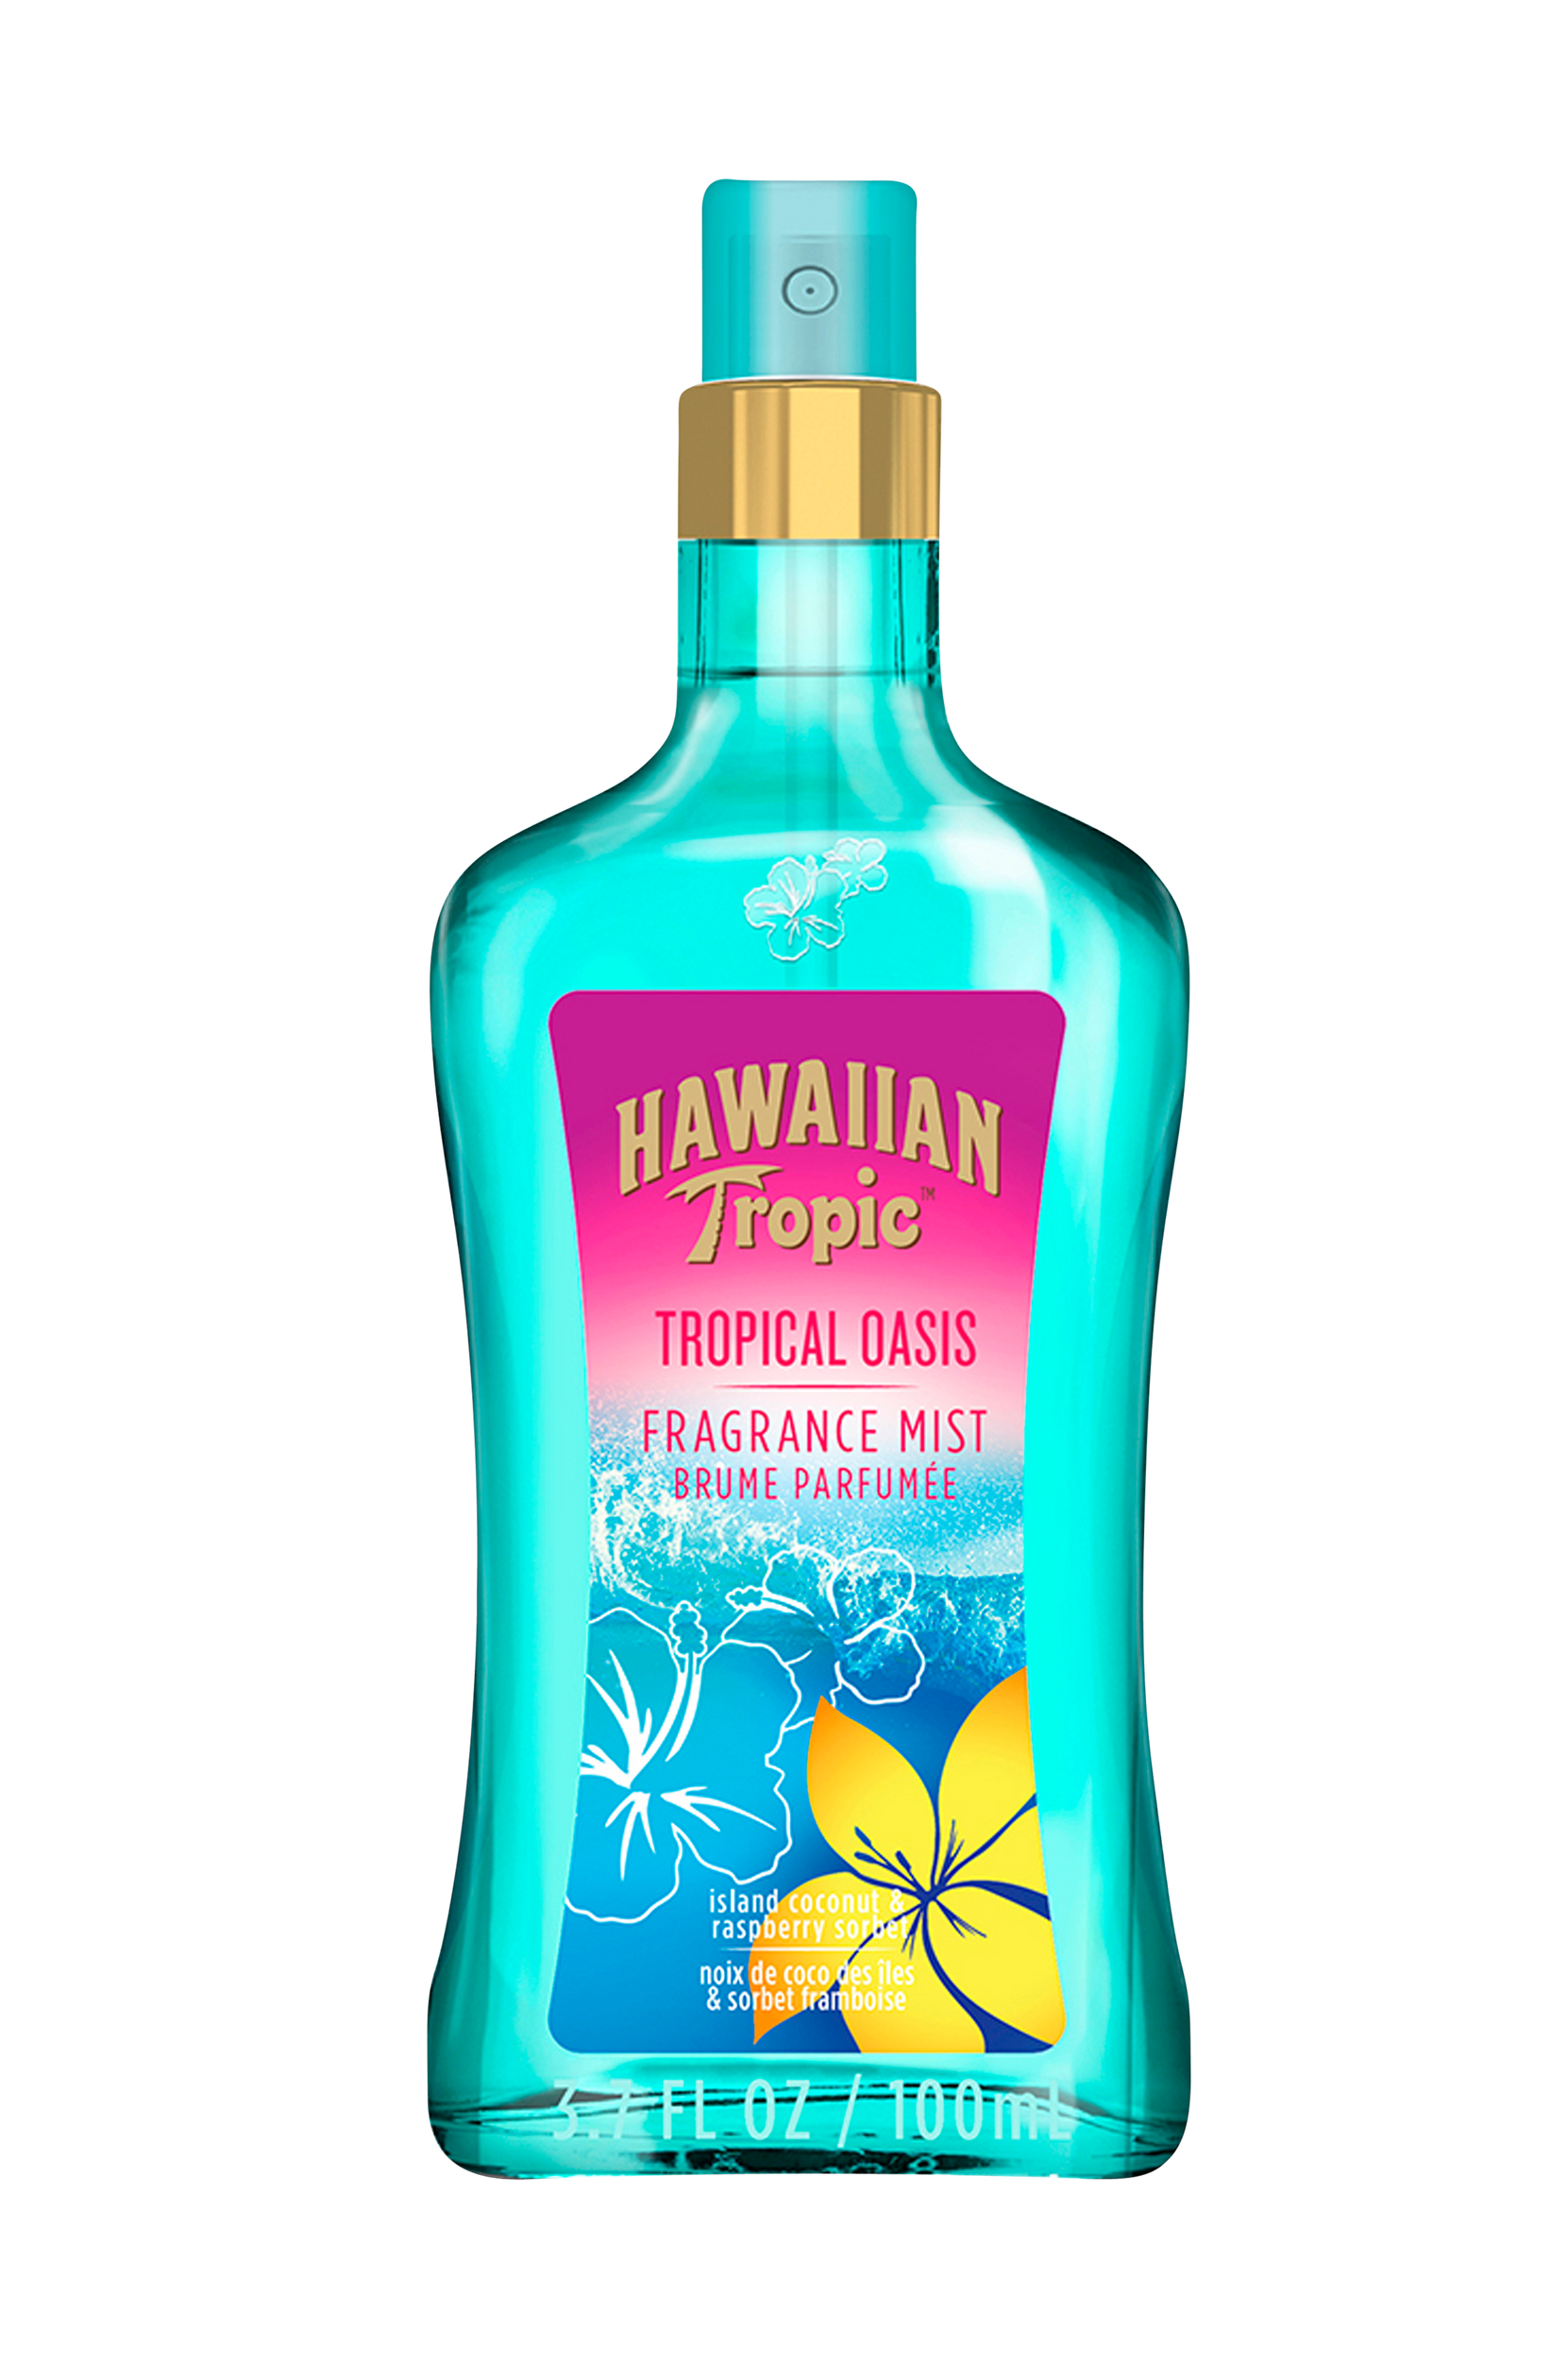 Tropical Oasis Body Mist 100 ml, Hawaiian Tropic